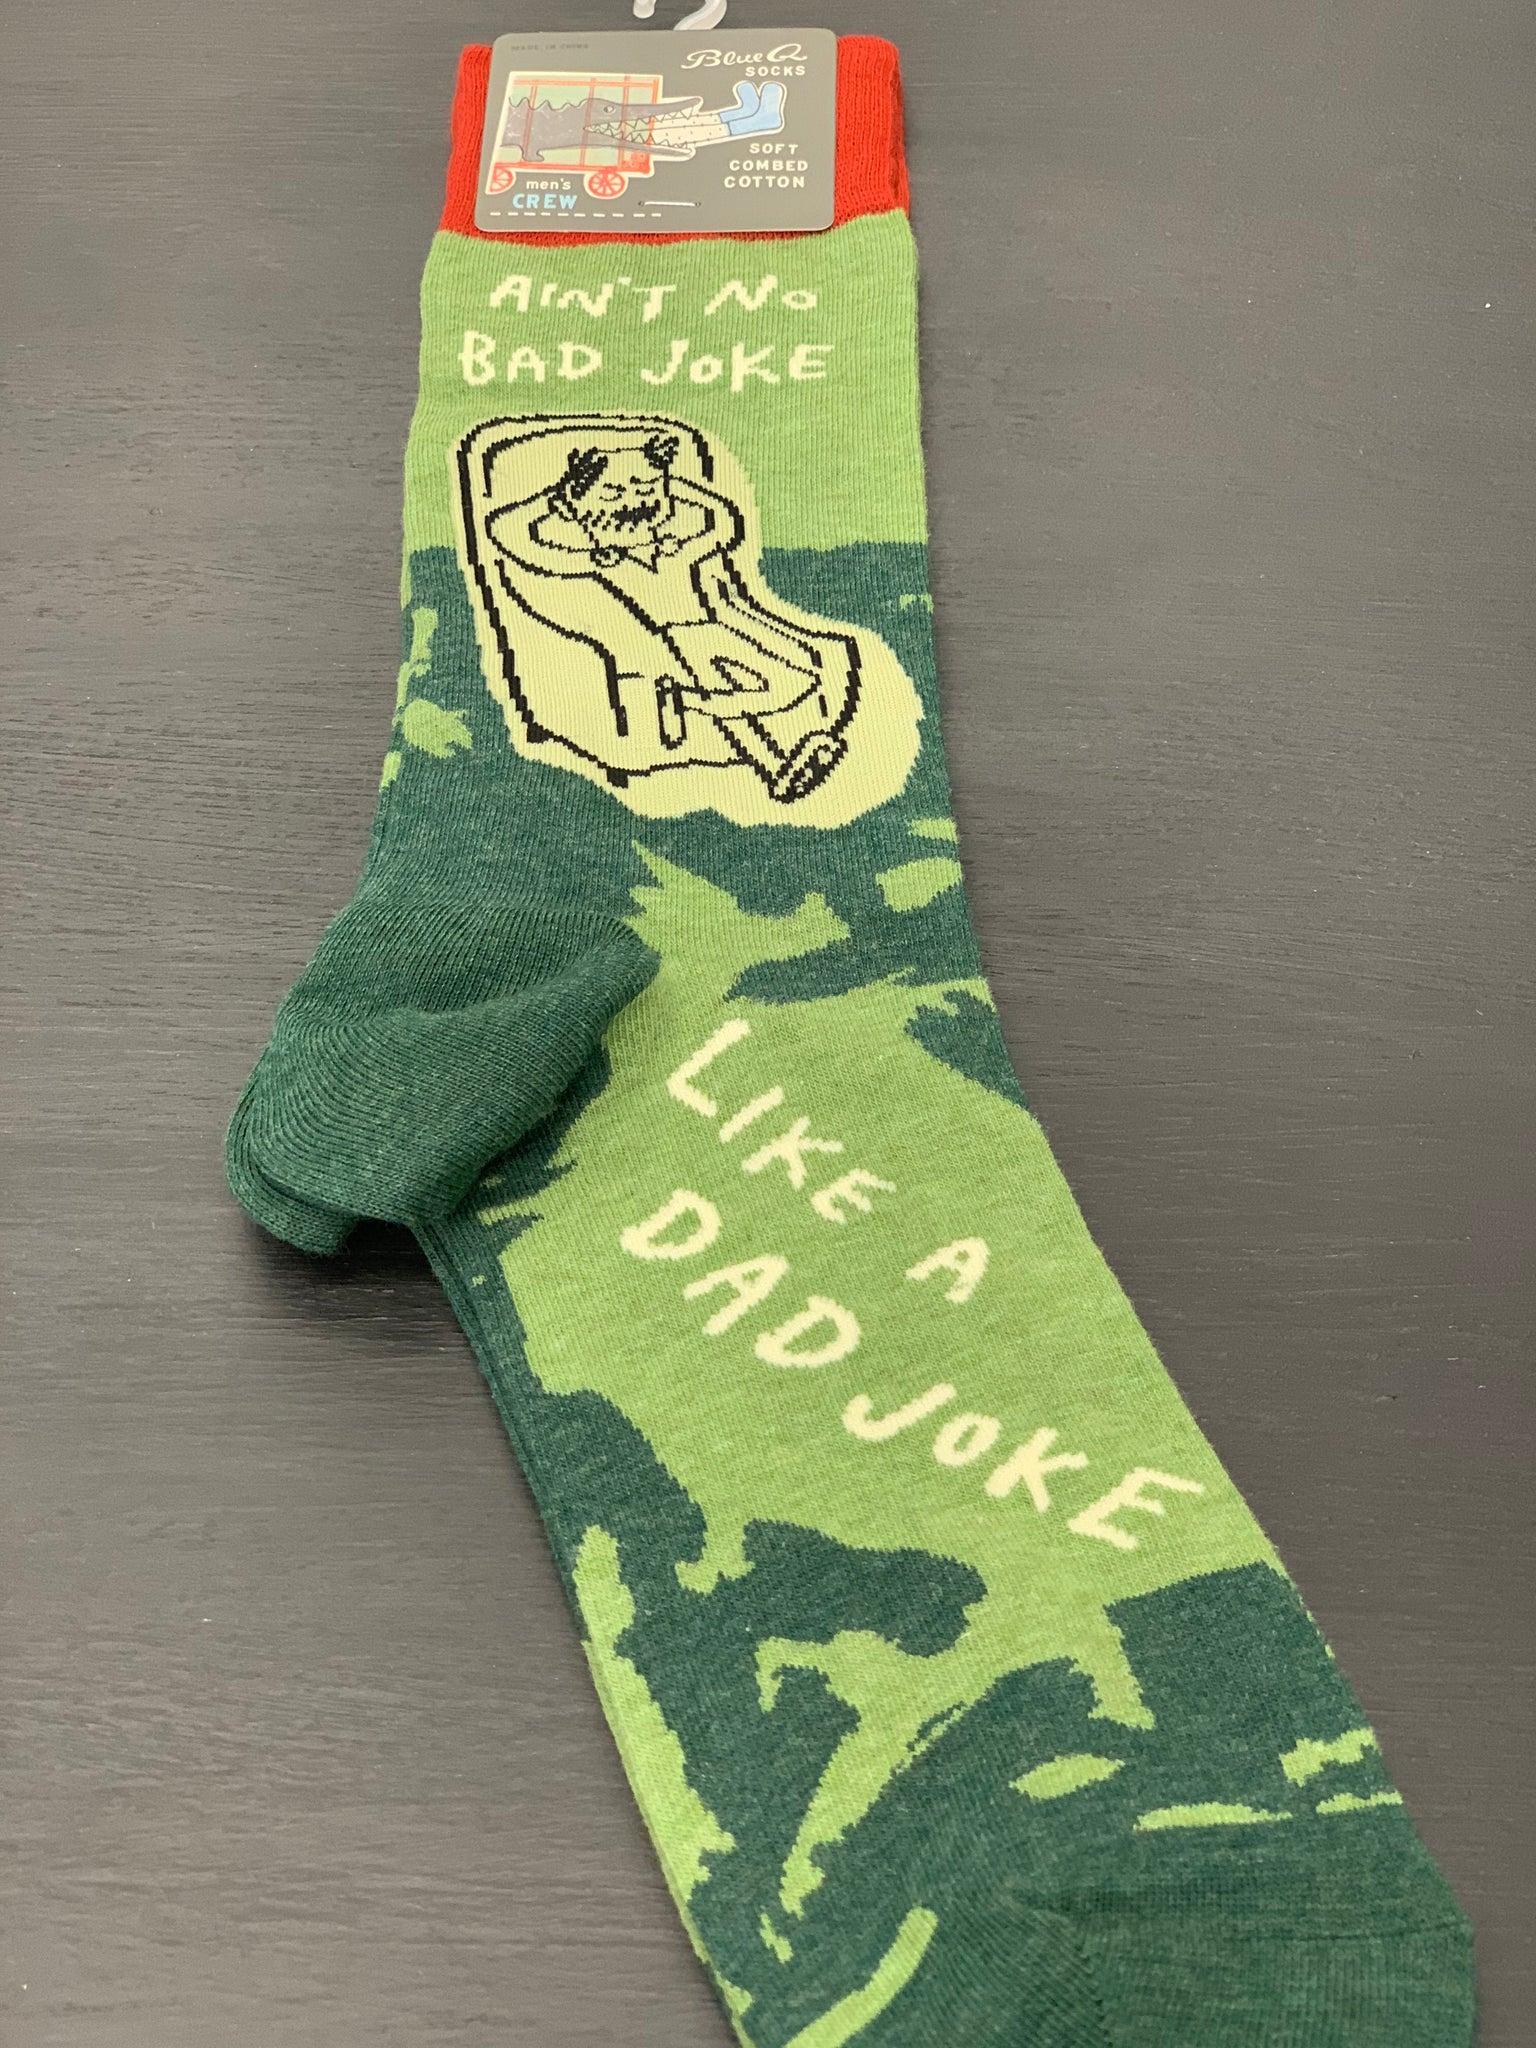 Poop Socks for Women - Shop Now